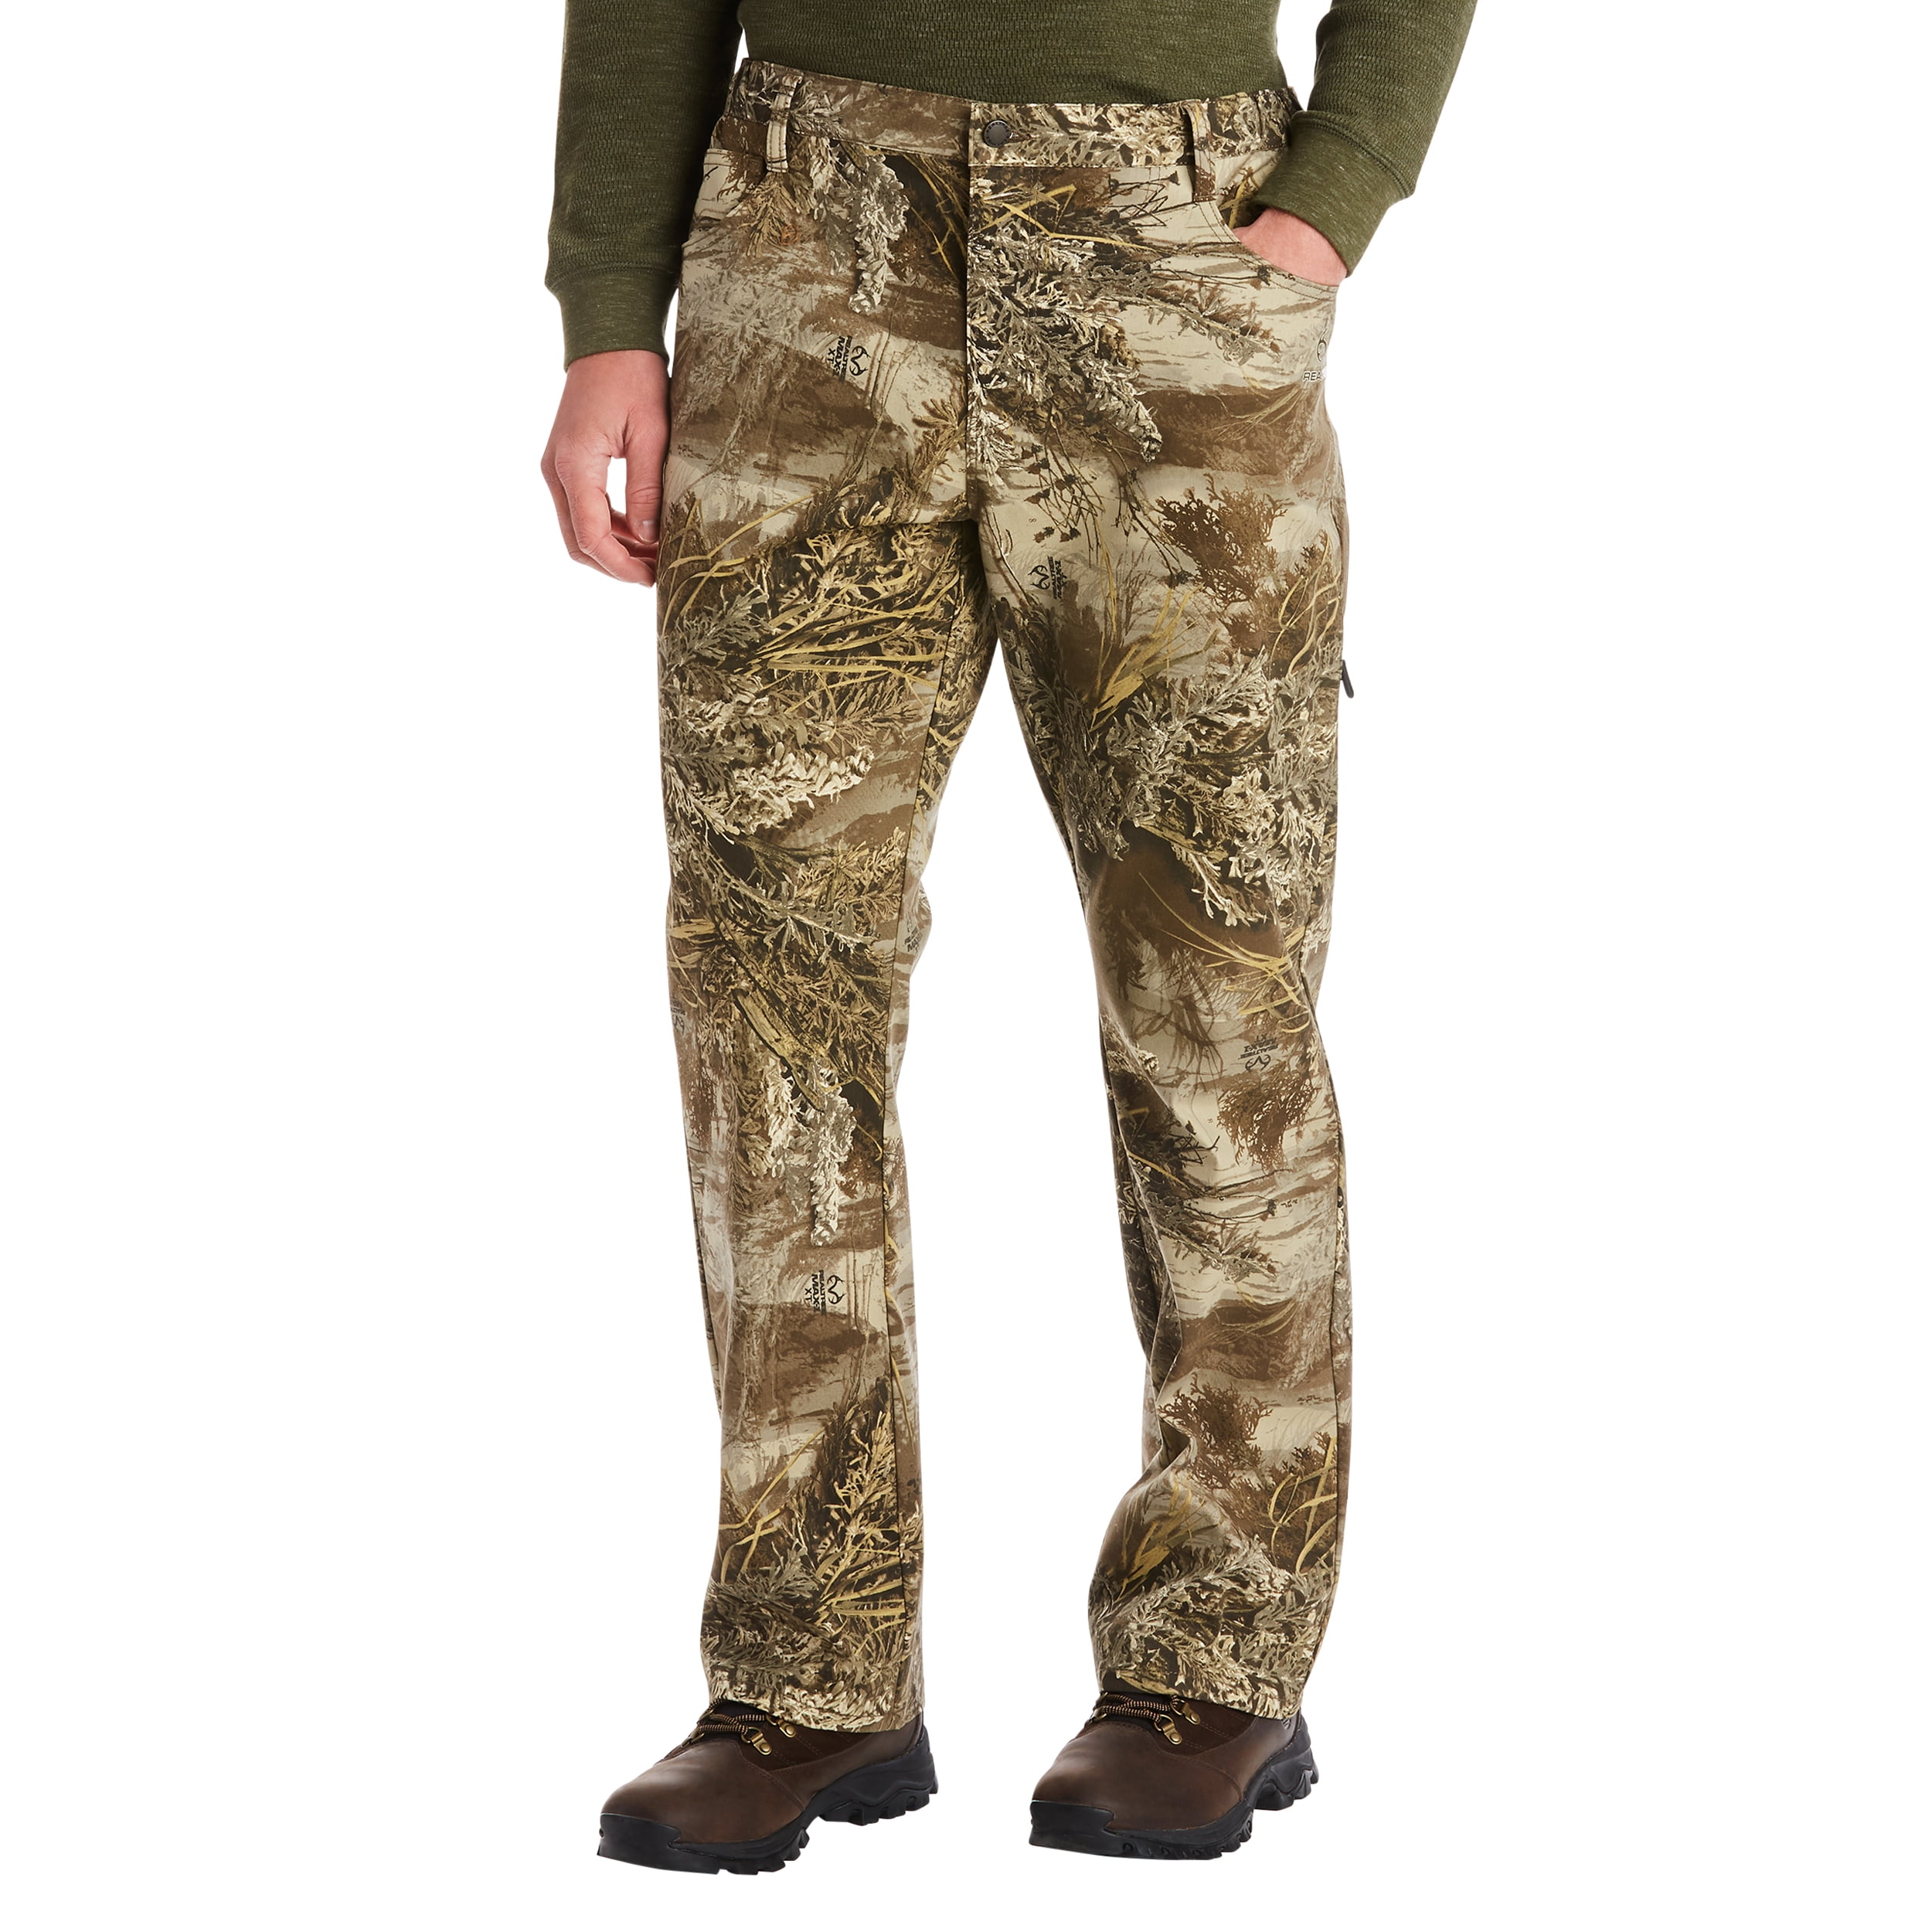 REALTREE MAX-1 XT 5 Pocket Pants Camo Camouflage Hunting Pants Size XL 40-42 